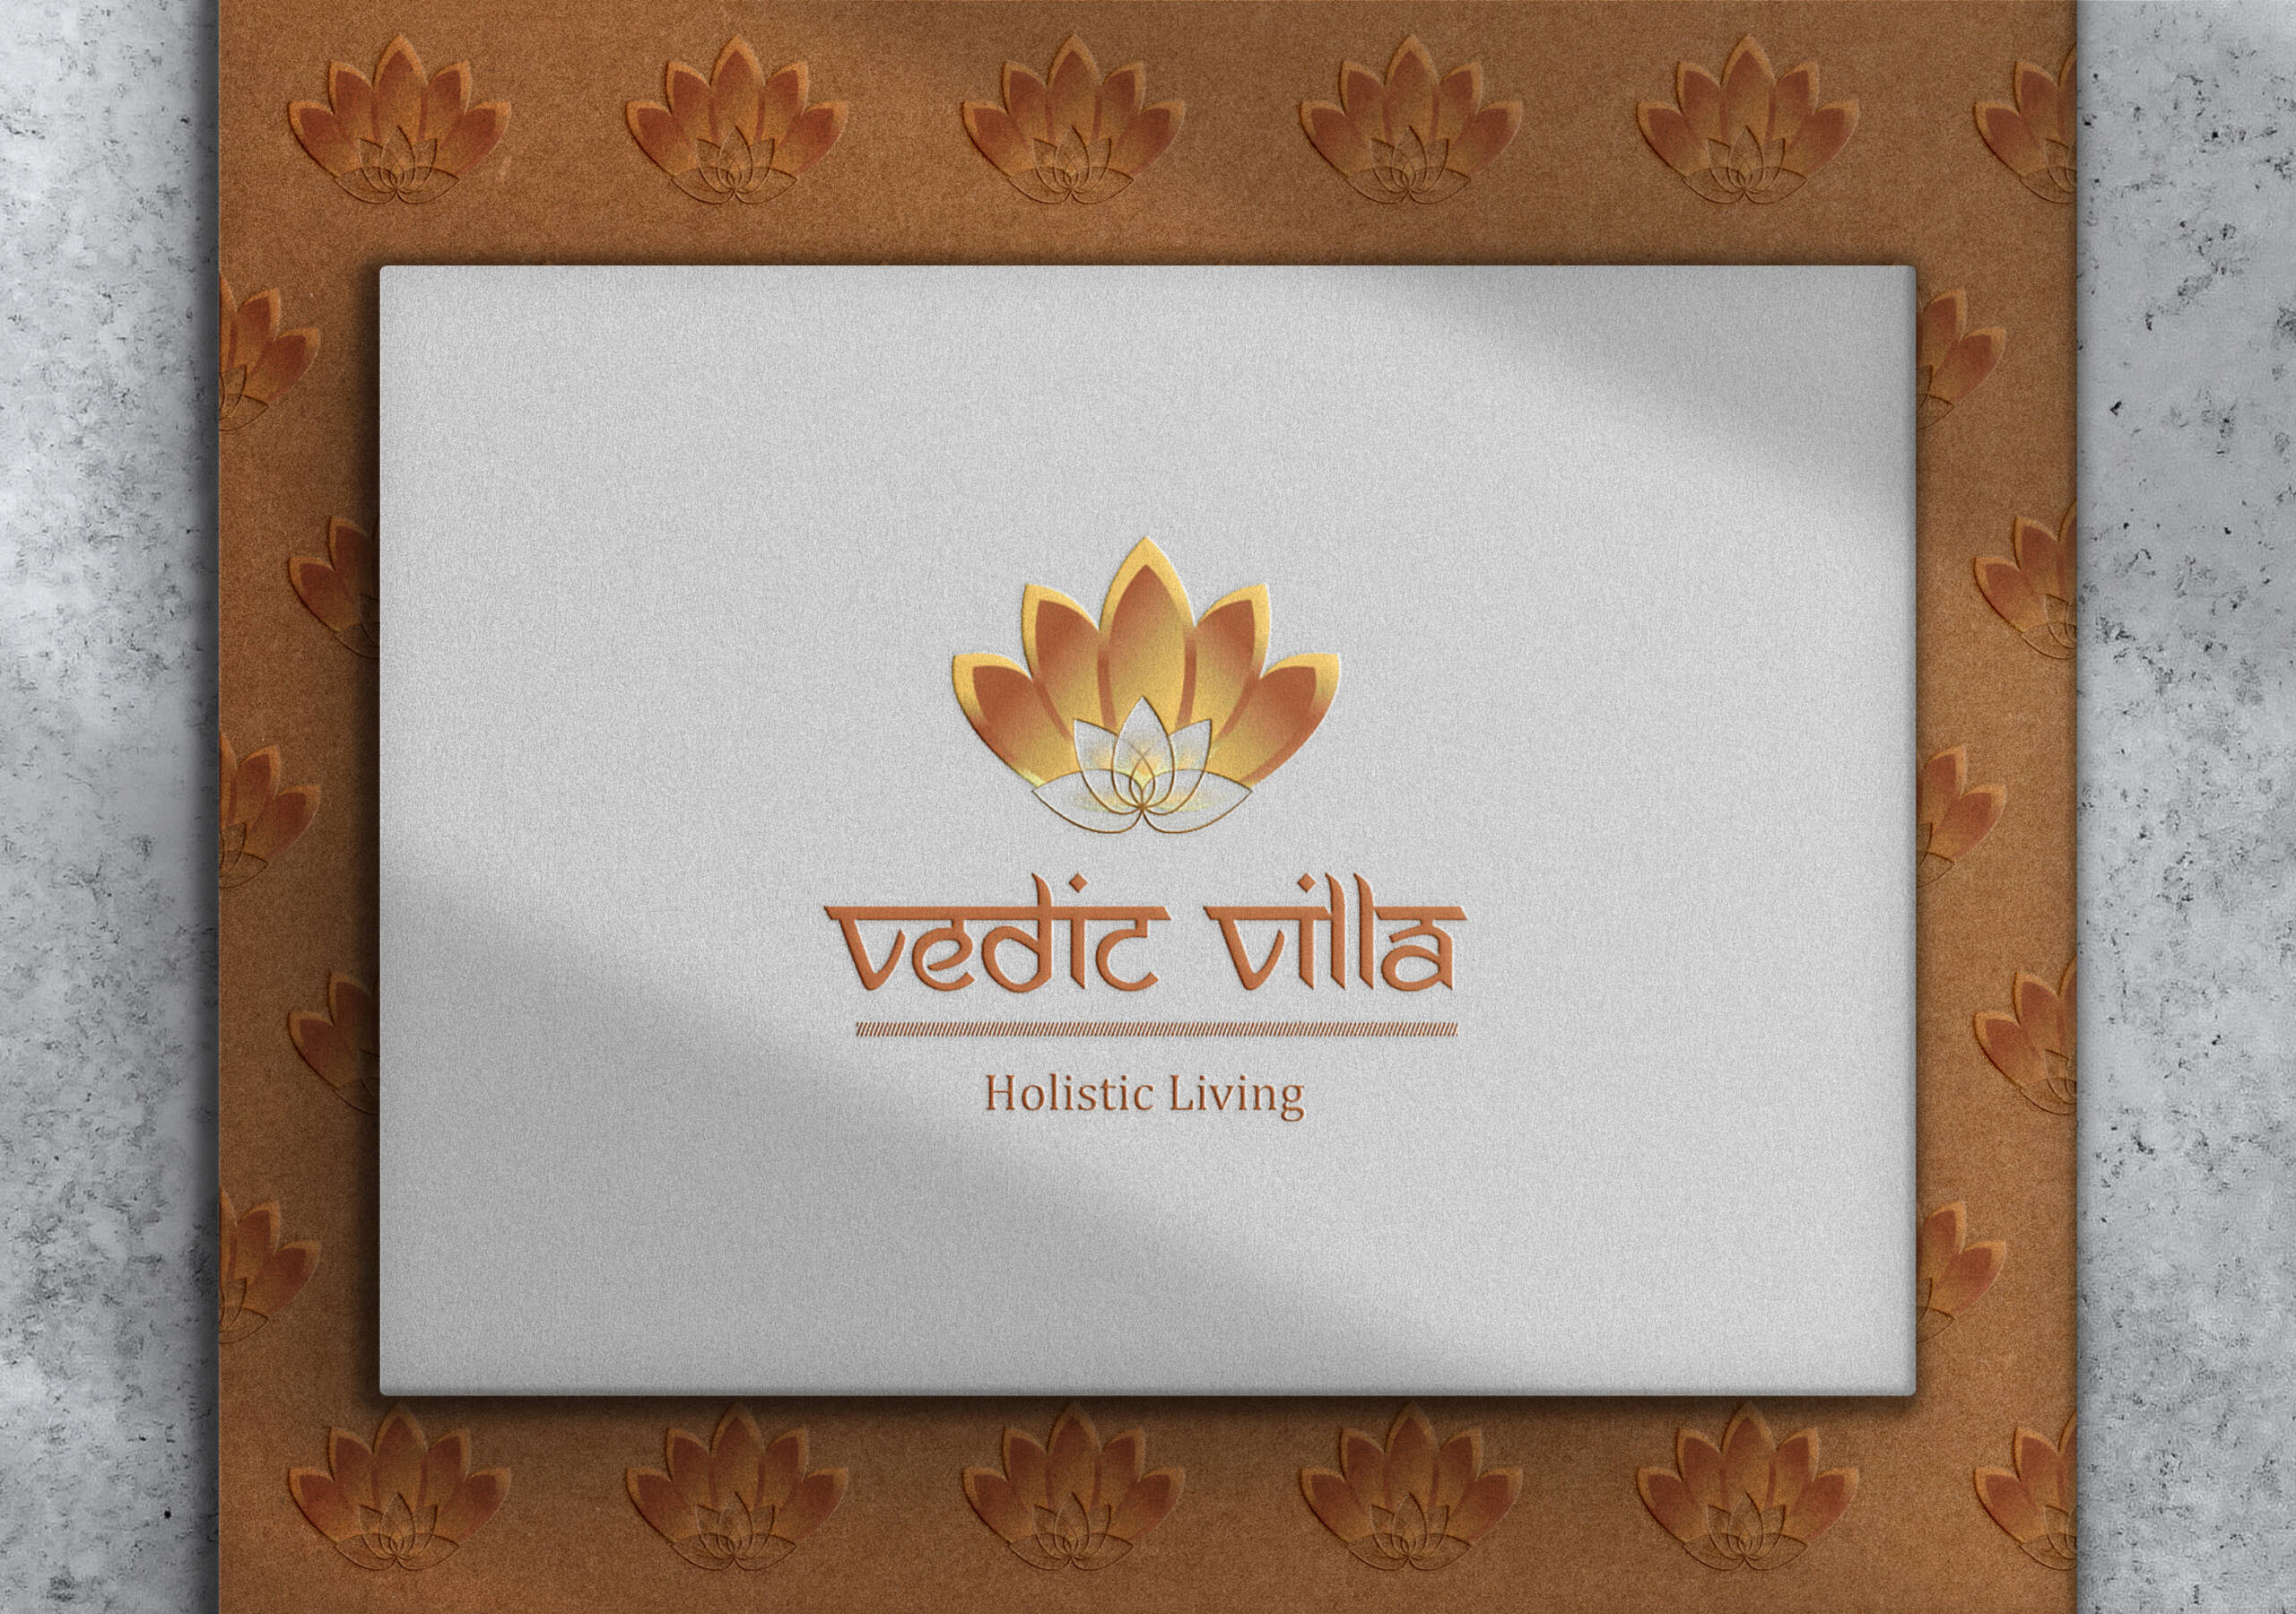 vedic villa branding